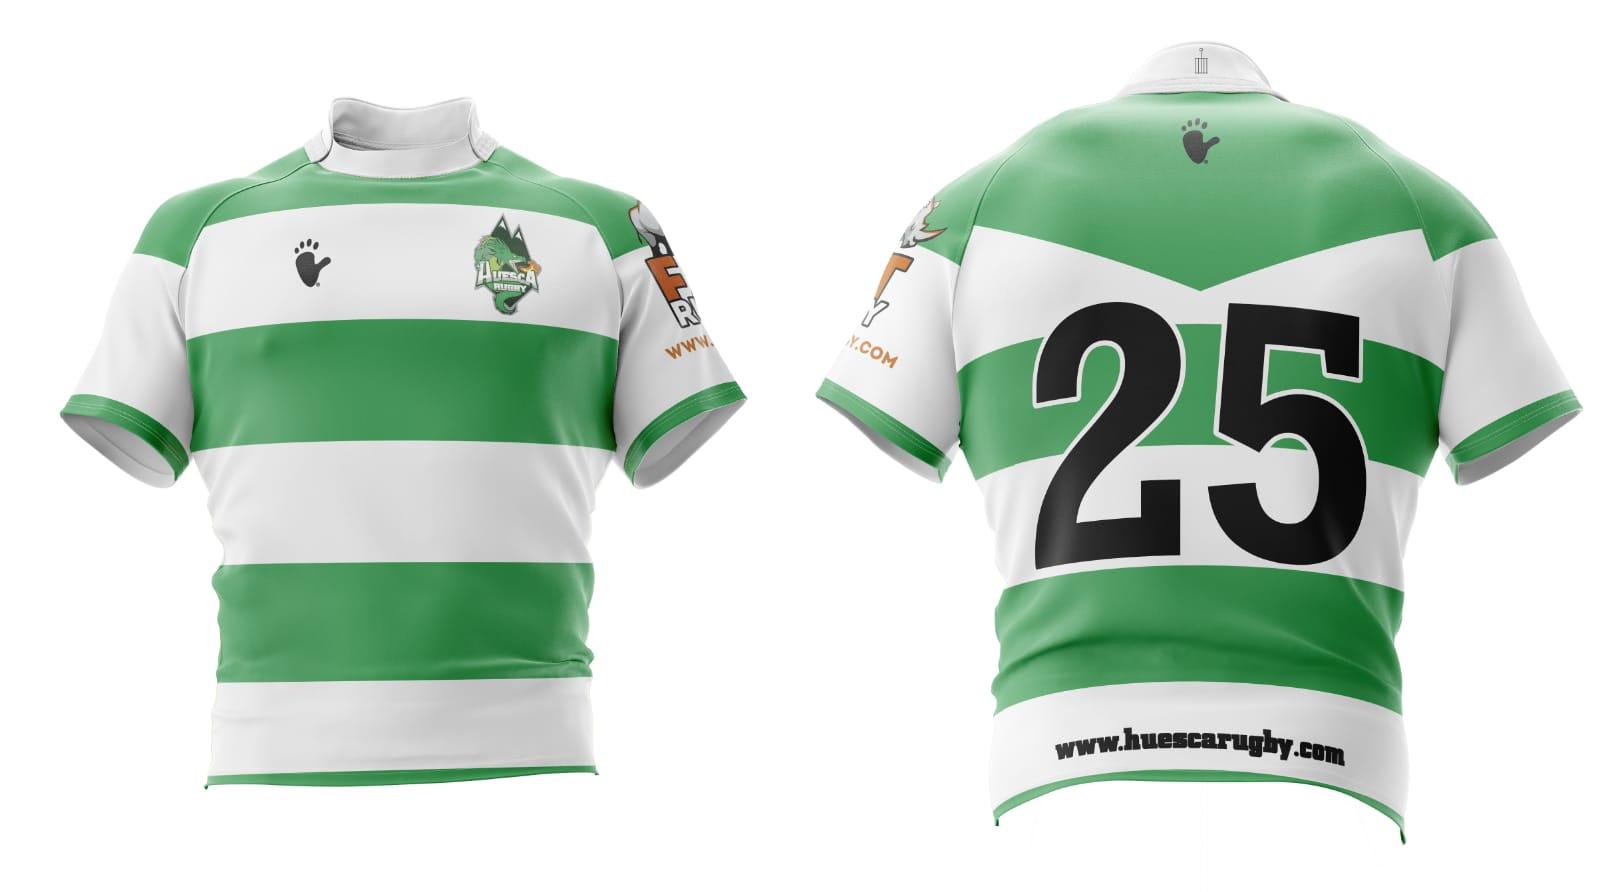 Camiseta Juego Huesca Rugby - Talla XS